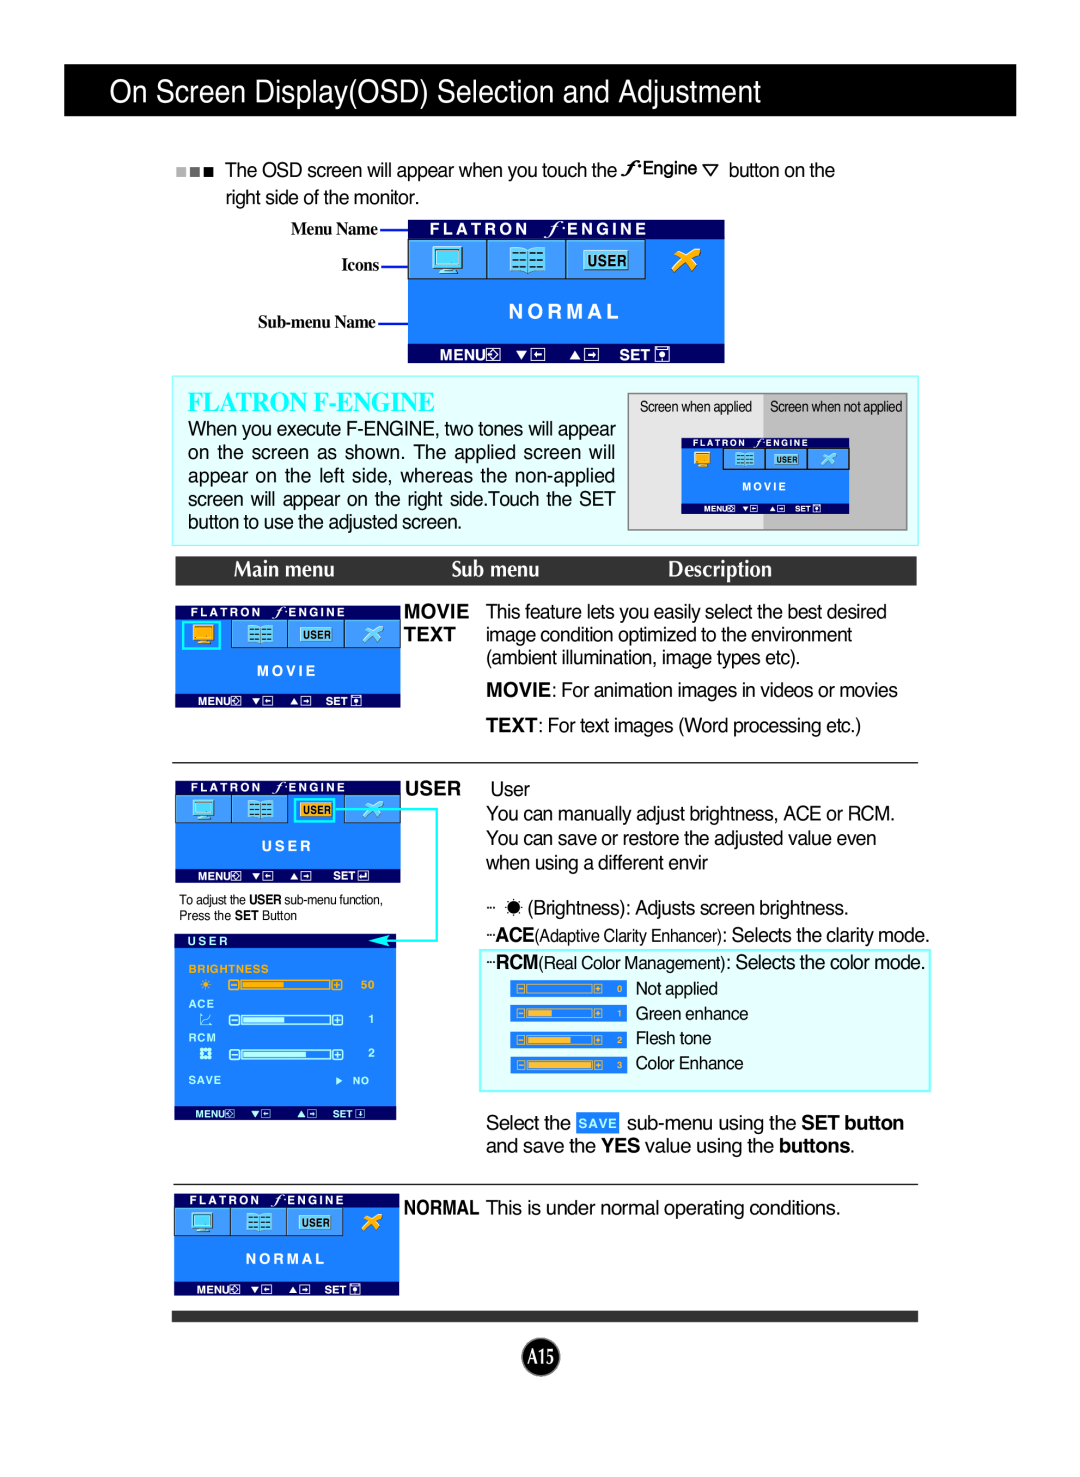 LG Electronics L1953T On Screen DisplayOSD Selection and Adjustment, Flatron F-Engine, Main menu, Sub menu, Description 